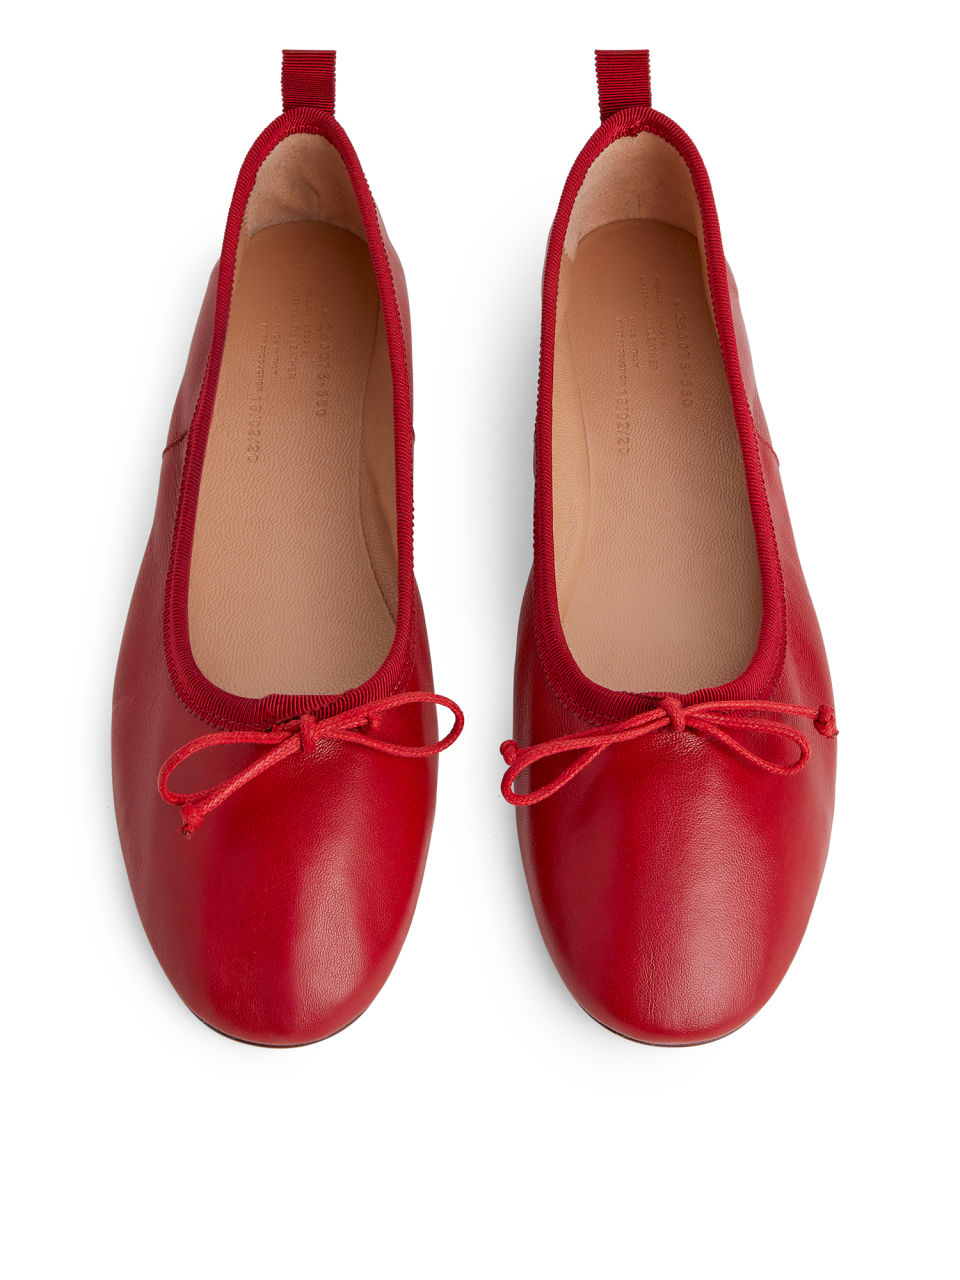 Red Ballet Flats Sale - www.decision-tree.com 1692857845